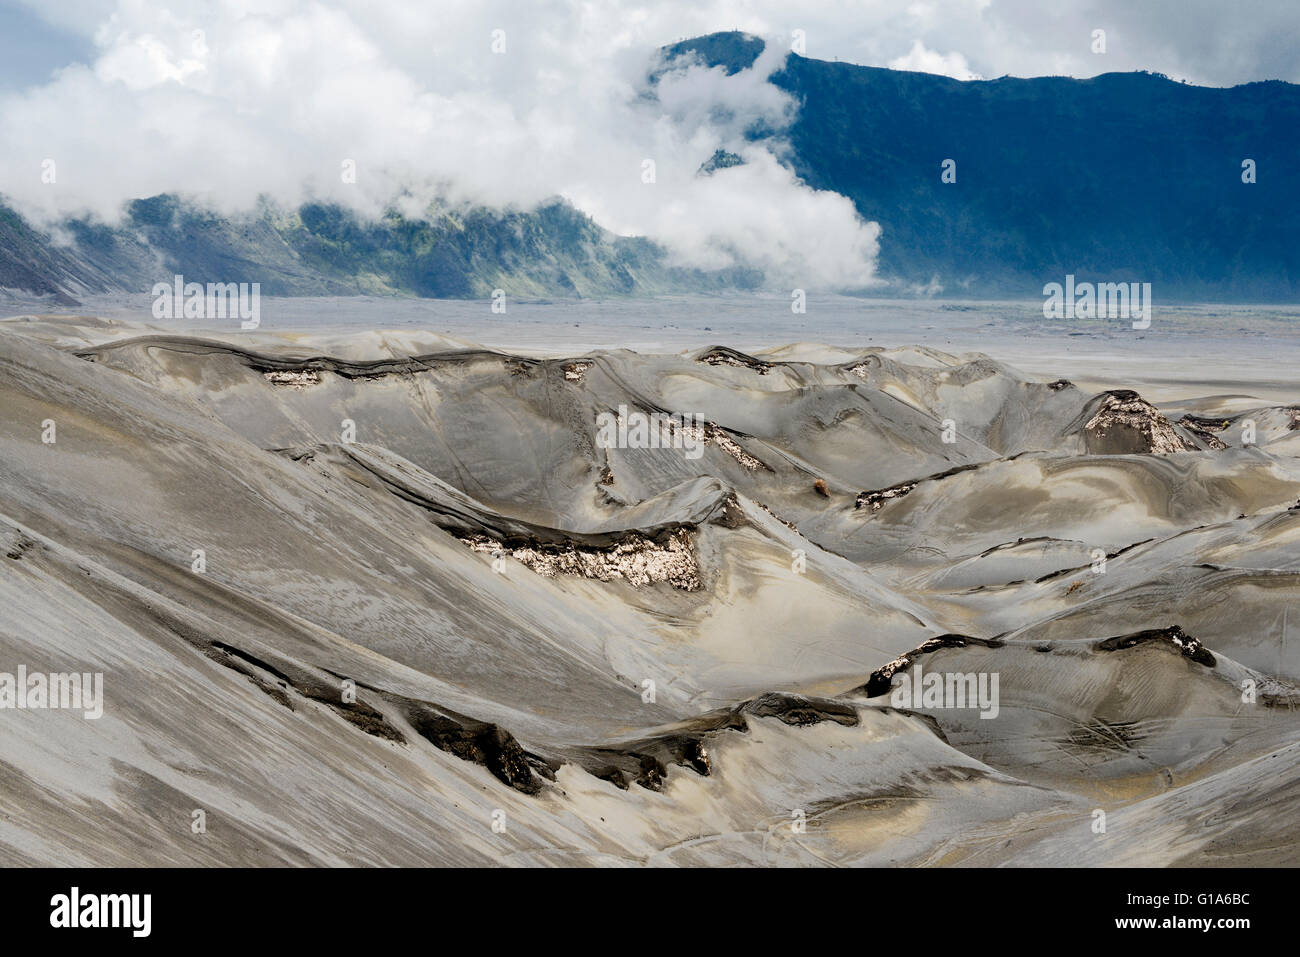 Arid Landscape Defined by Volcanic Eruption at Mt. Bromo, Tengger Semeru National Park, East Java, Indonesia. Stock Photo